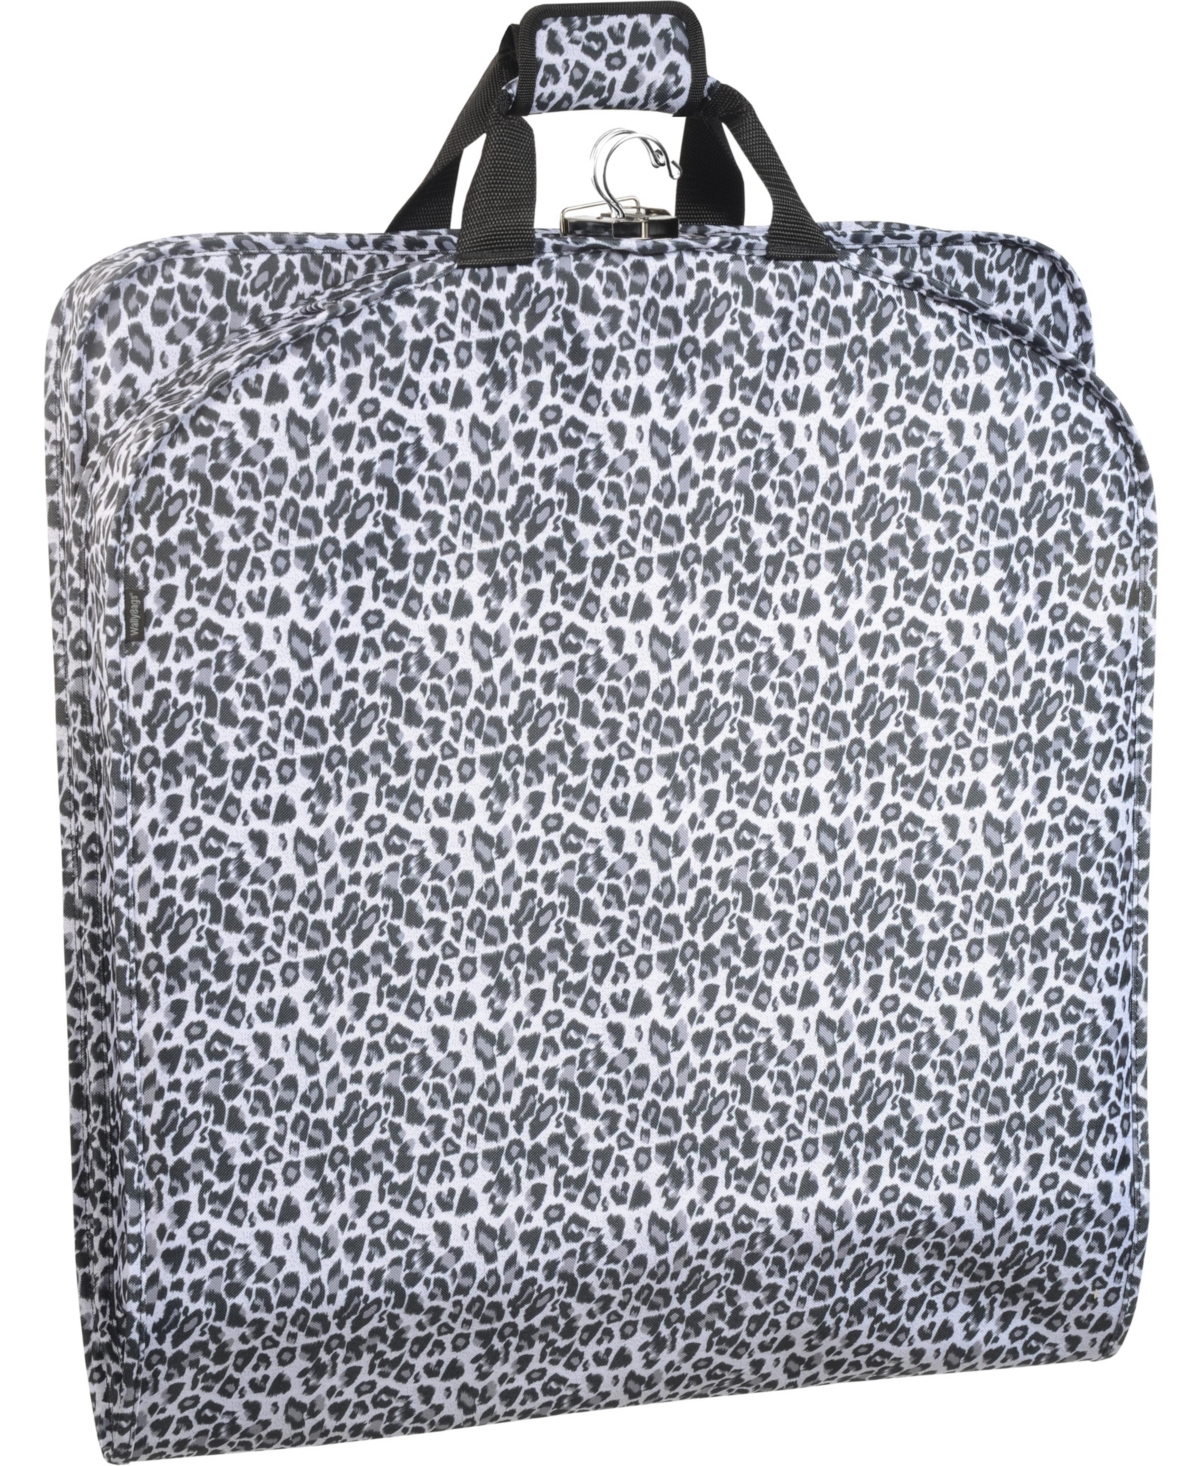 52" Deluxe Travel Garment Bag - Leopard